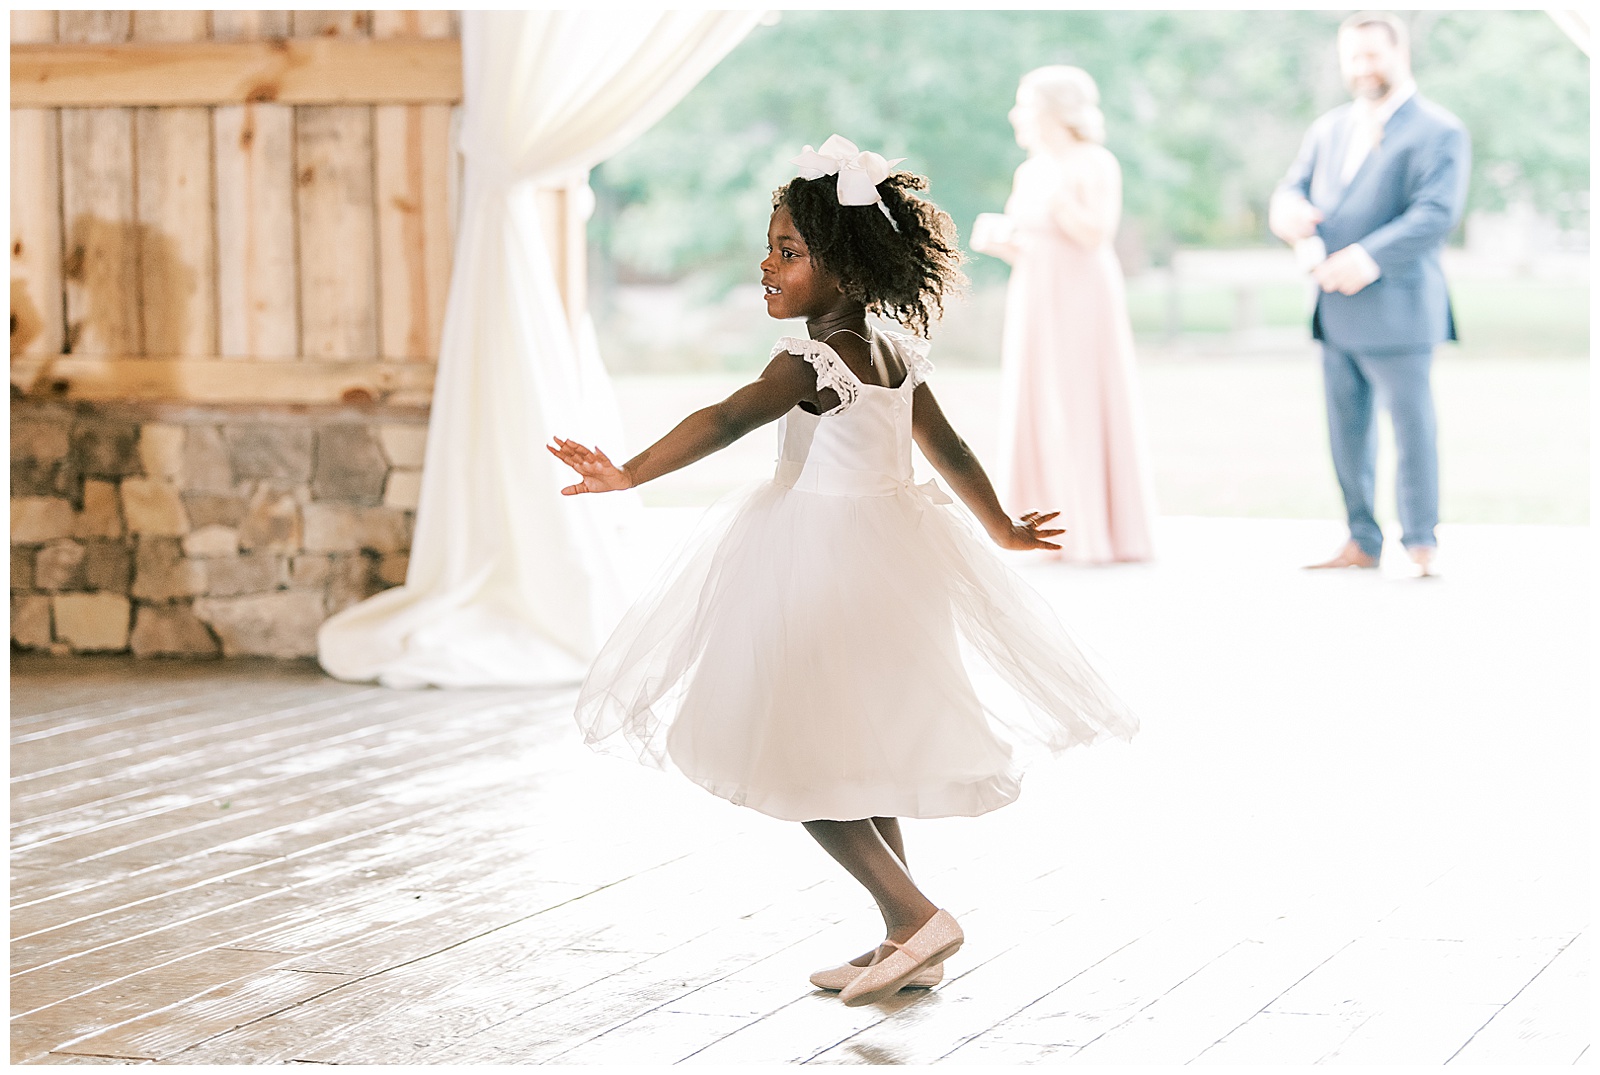 adorable flower girl in white dress twirls in wedding reception entry